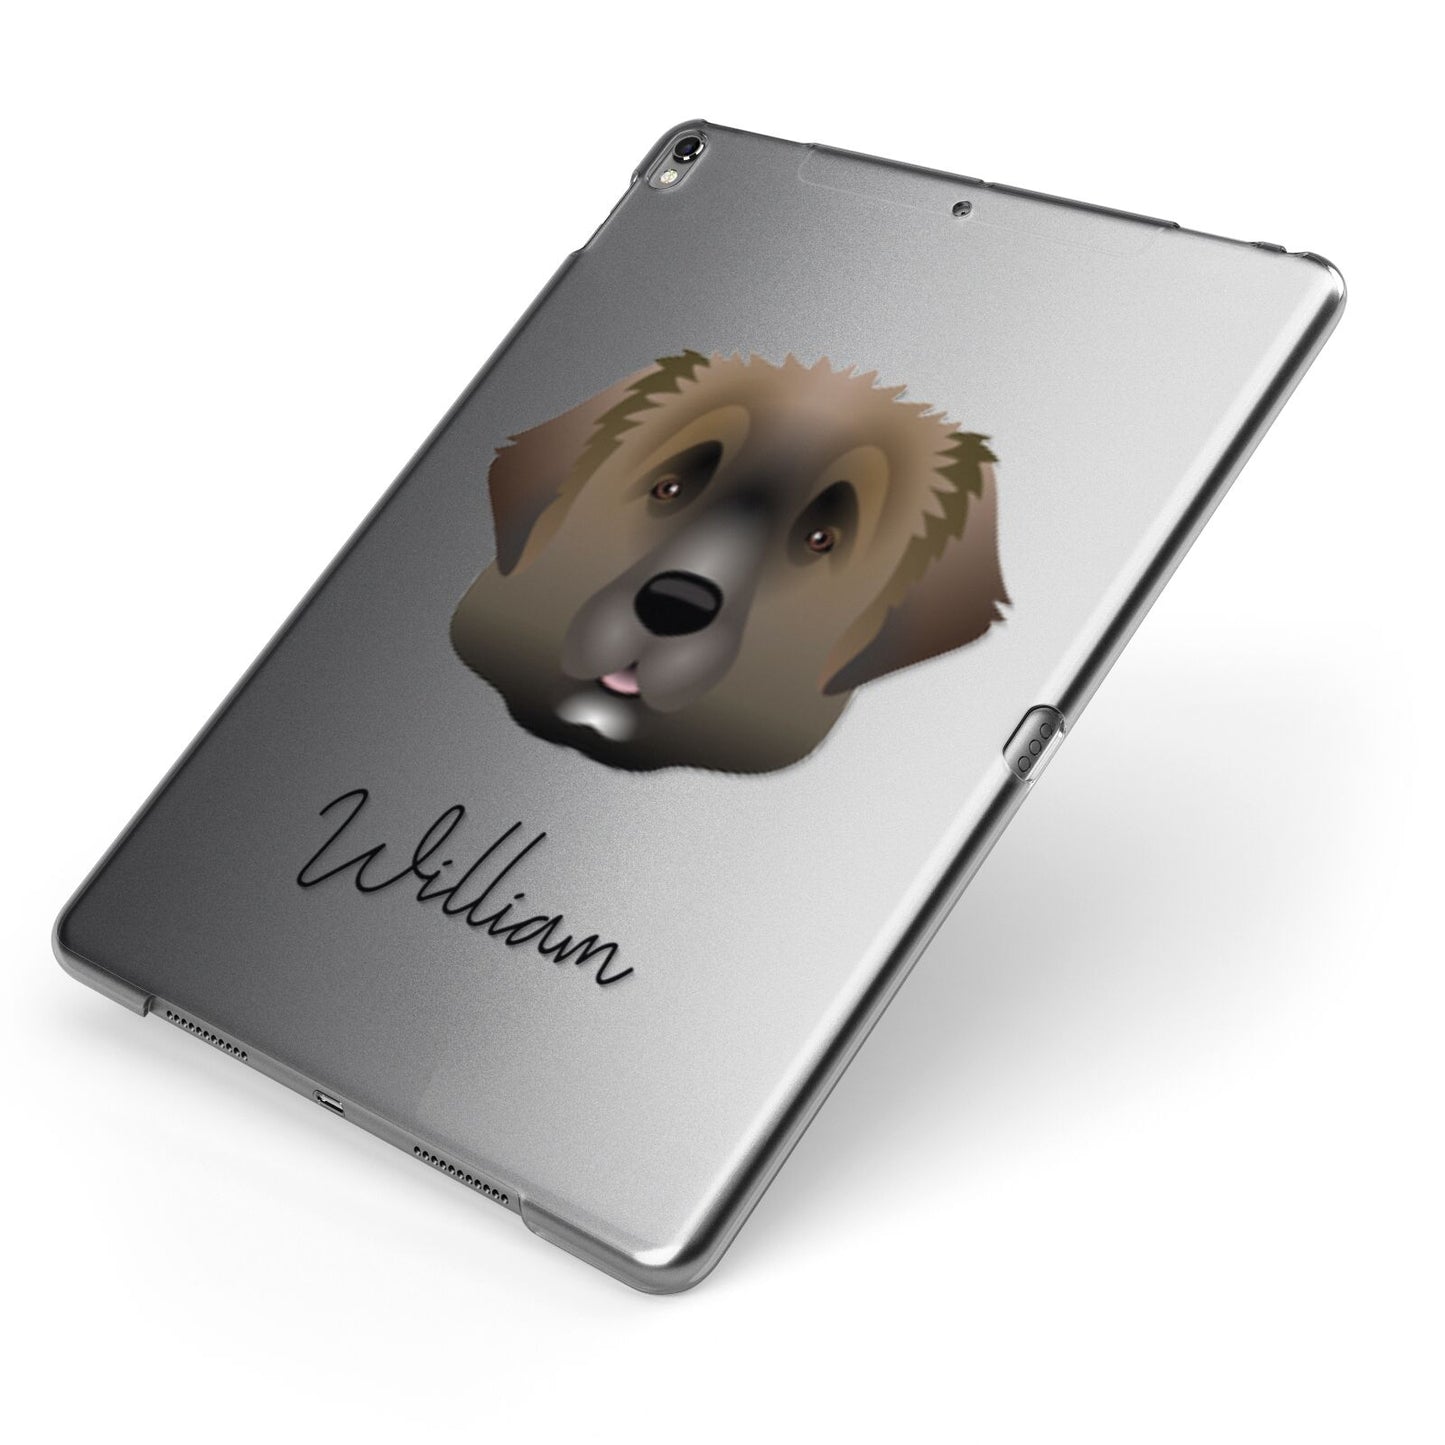 Leonberger Personalised Apple iPad Case on Grey iPad Side View